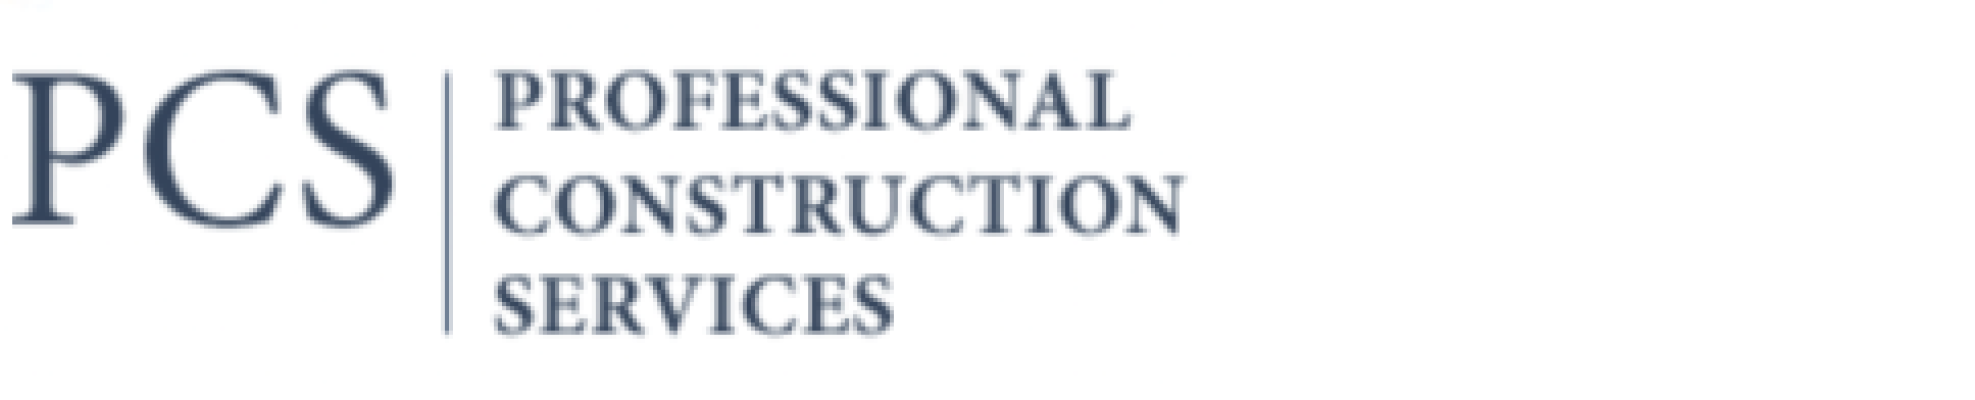 Professional Construction Services logo